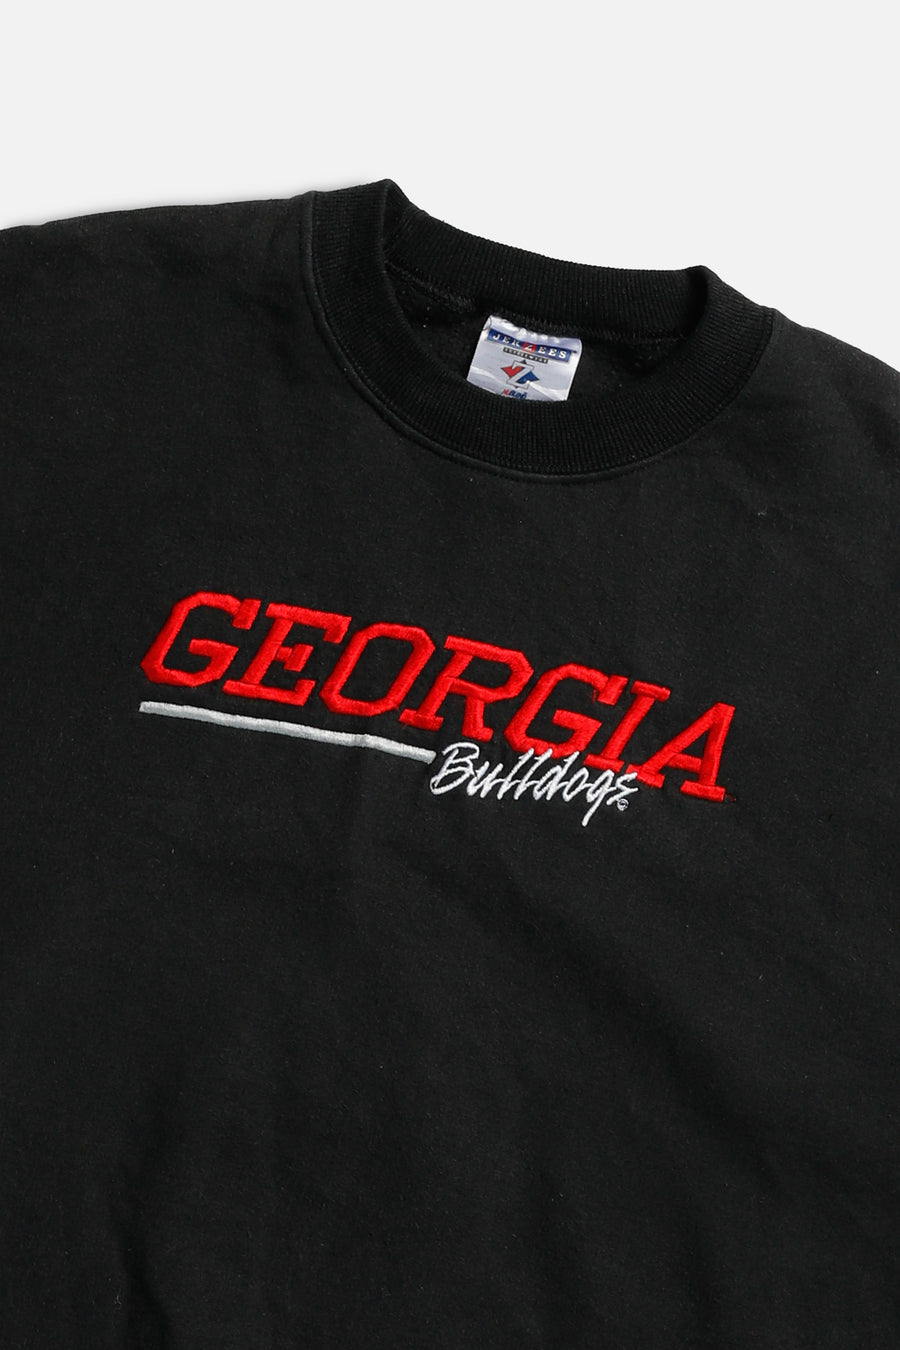 Vintage Georgia Bulldogs Sweatshirt - XL